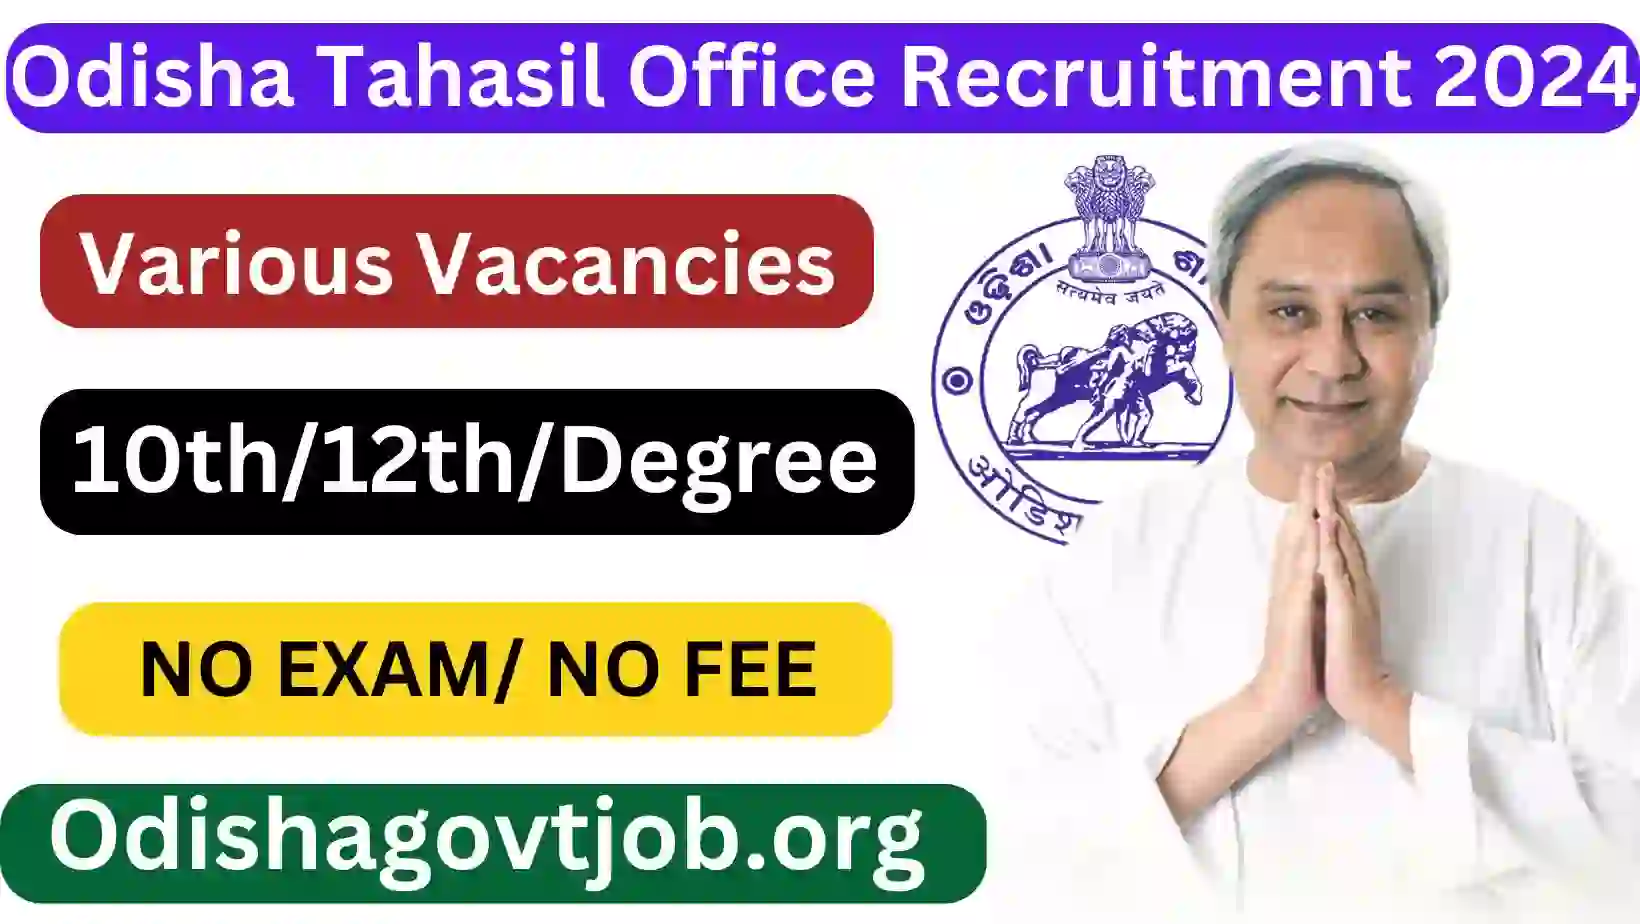 Odisha Tahasil Office Recruitment 2024